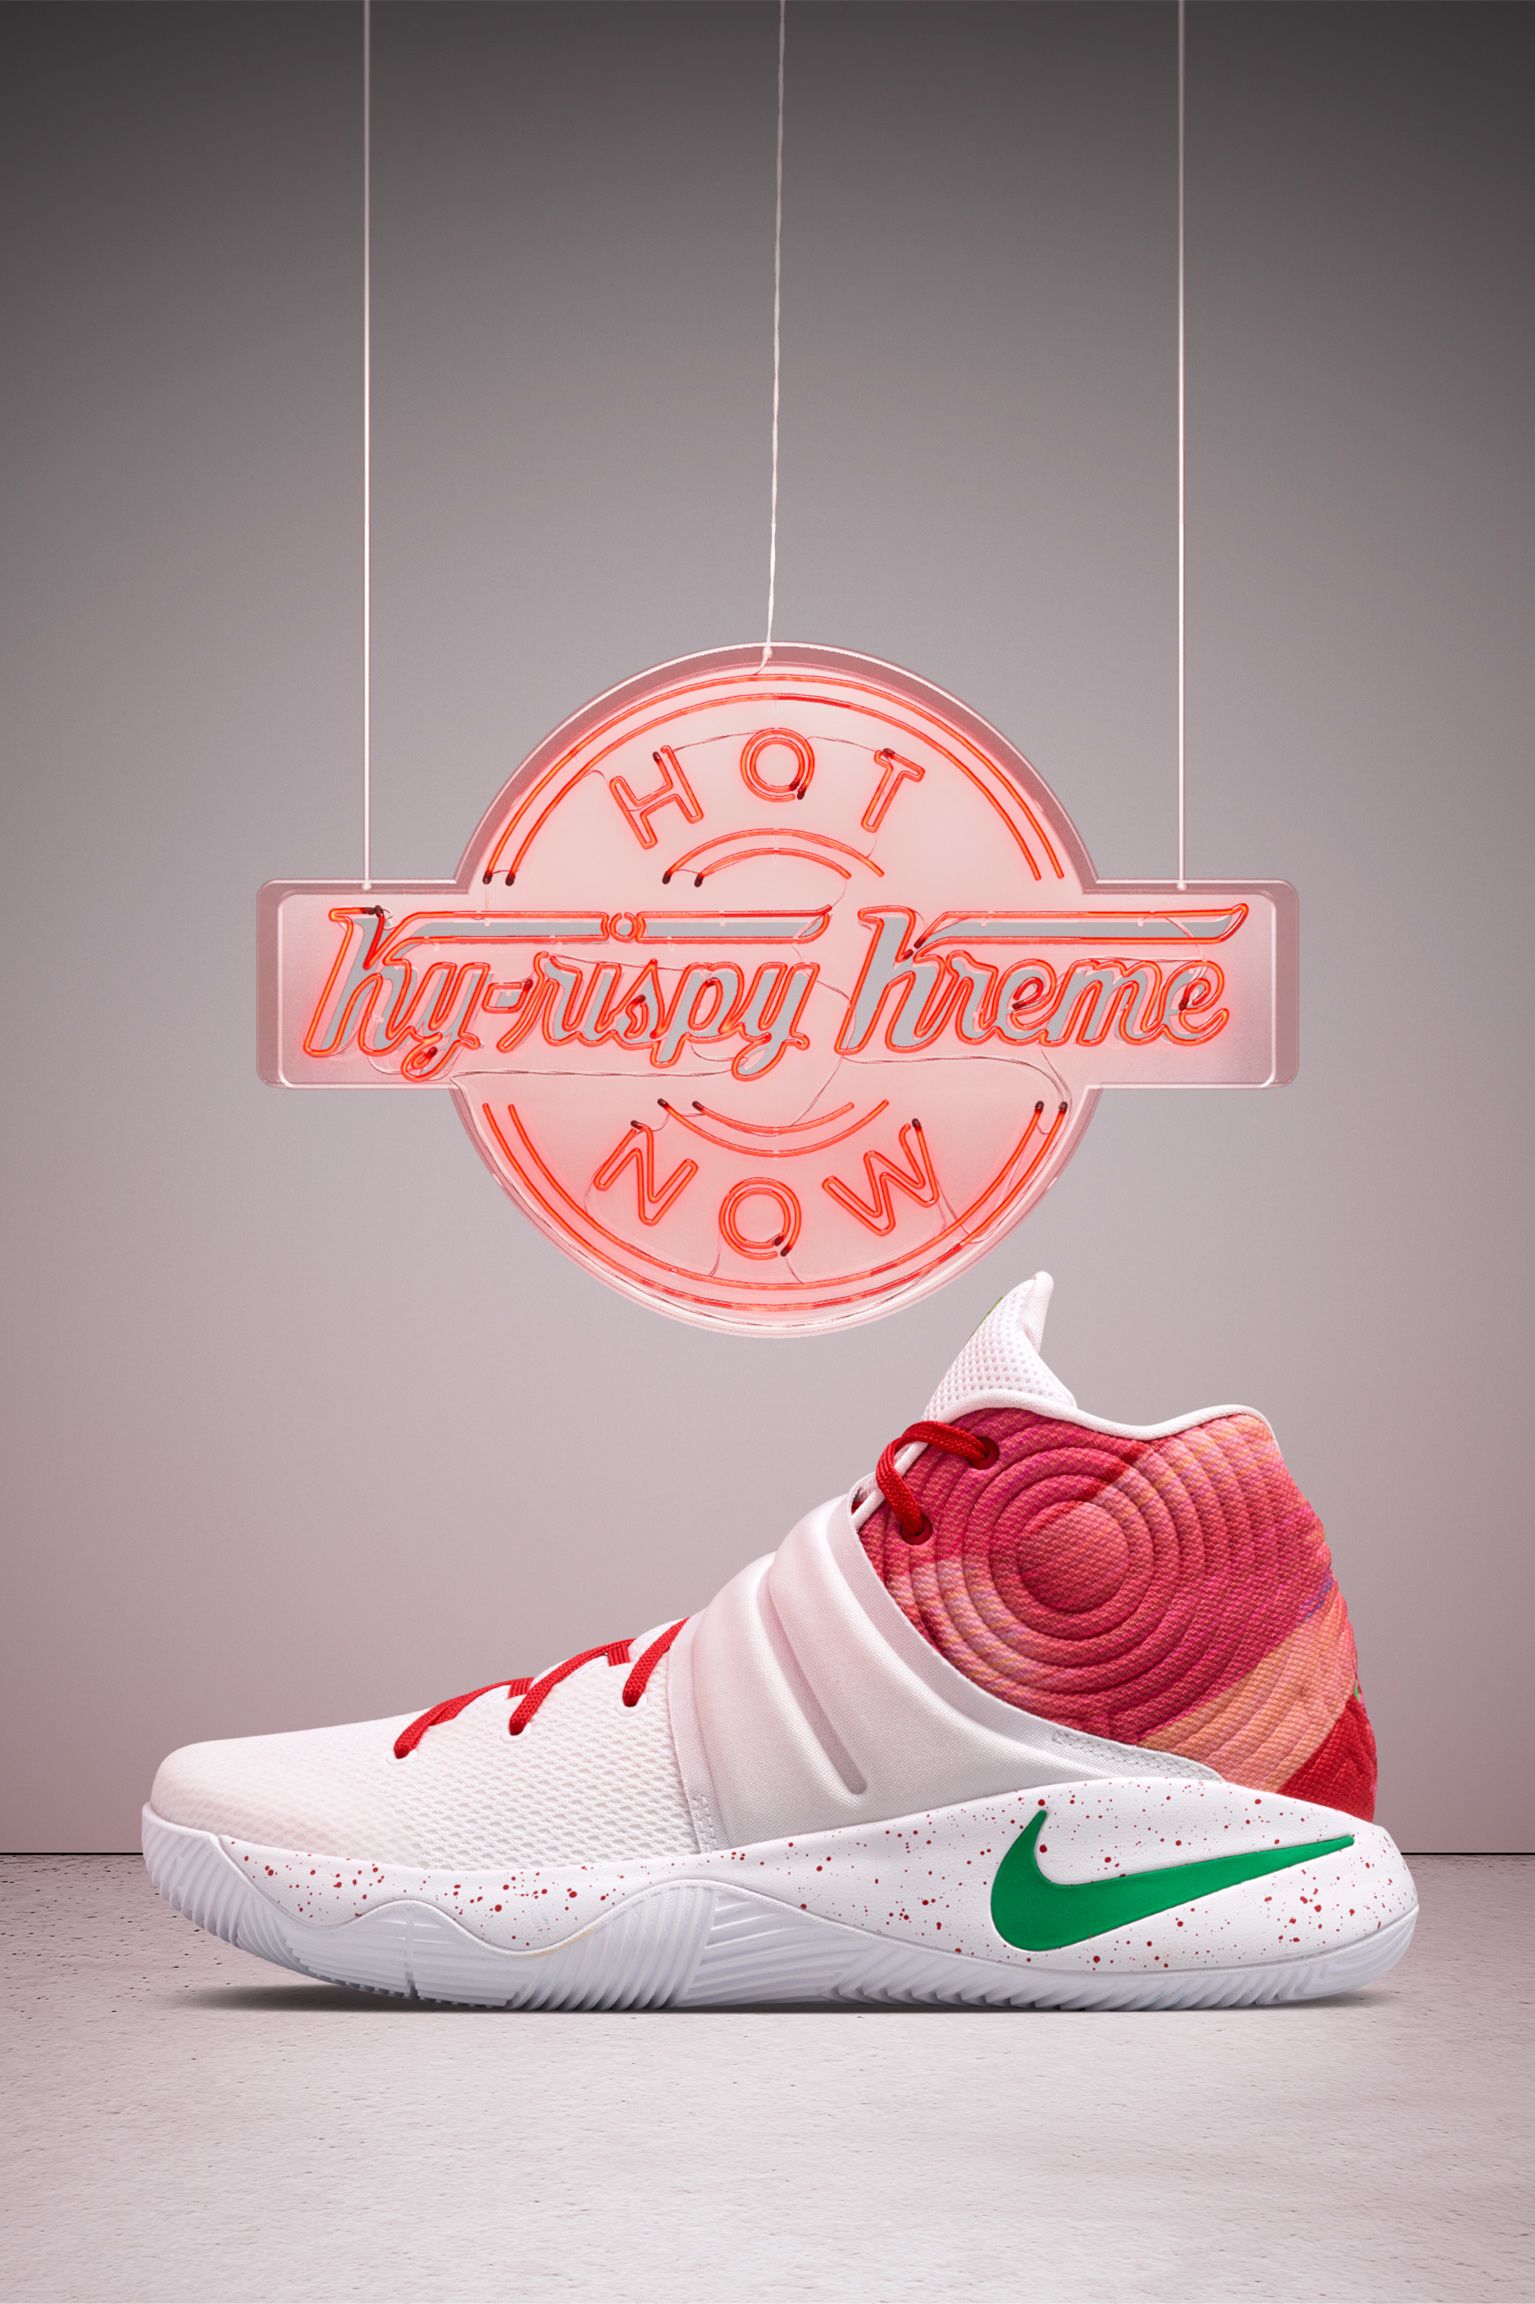 Nike Kyrie 2 'Ky-Rispy Kreme' iD 